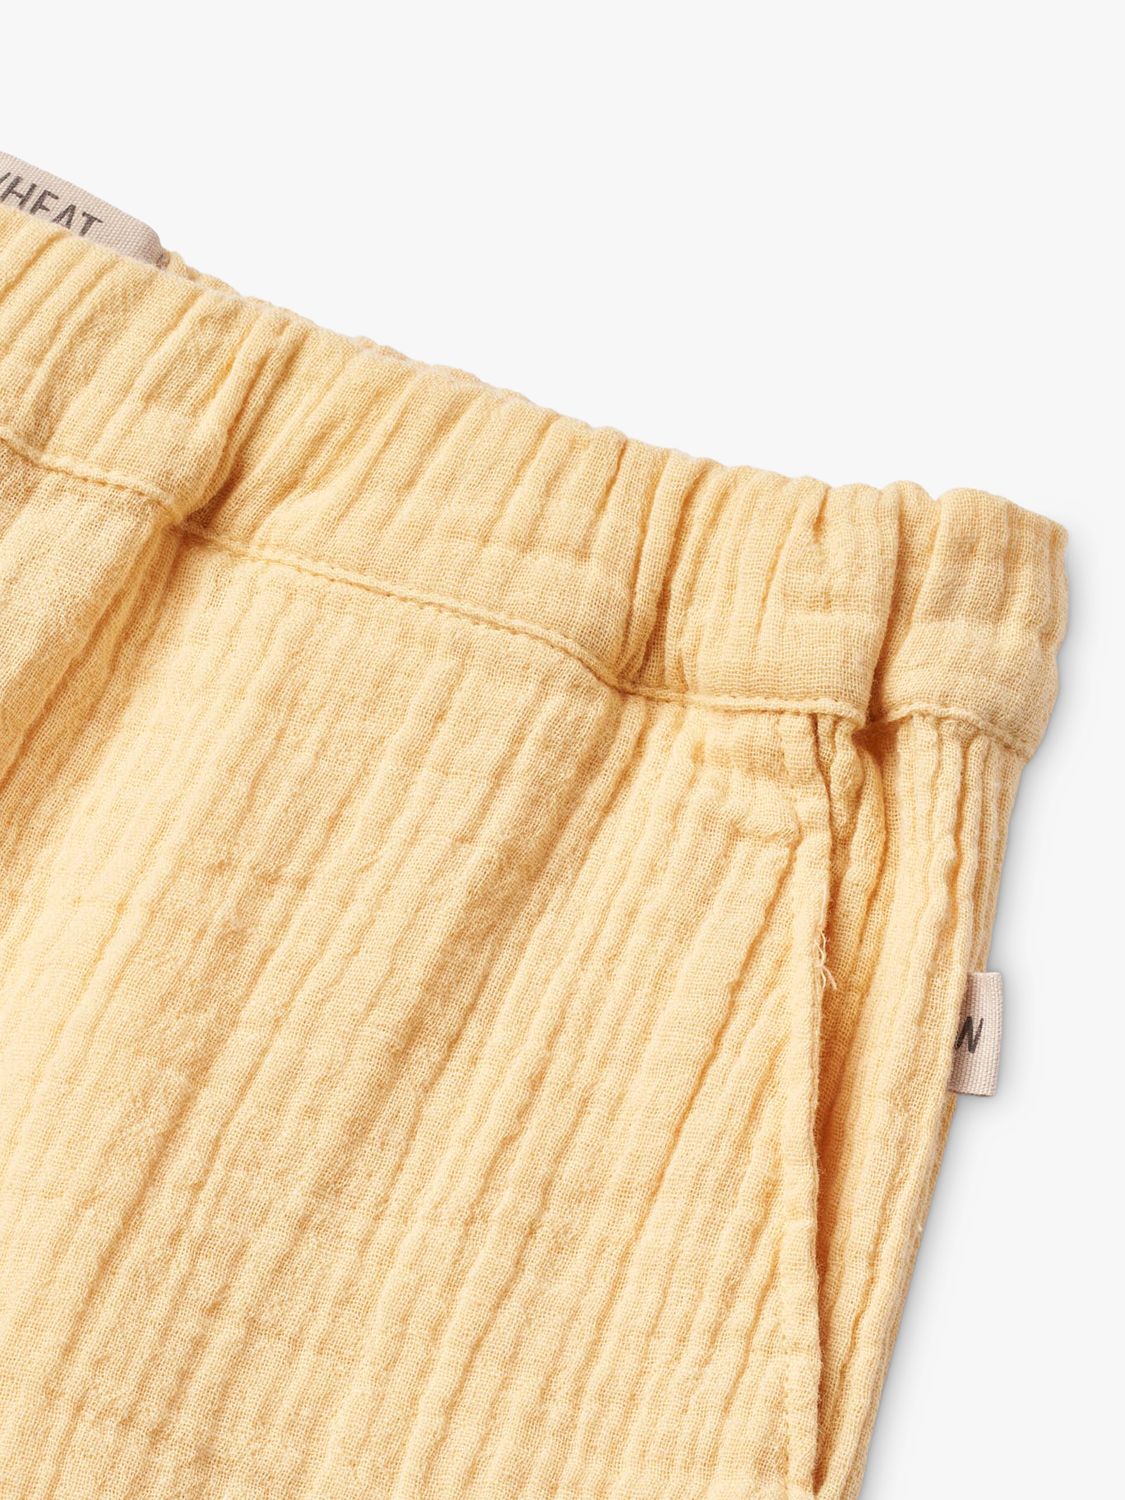 WHEAT Kids' Organic Cotton Lace Eileen Shorts, Pale Apricot, 8 years